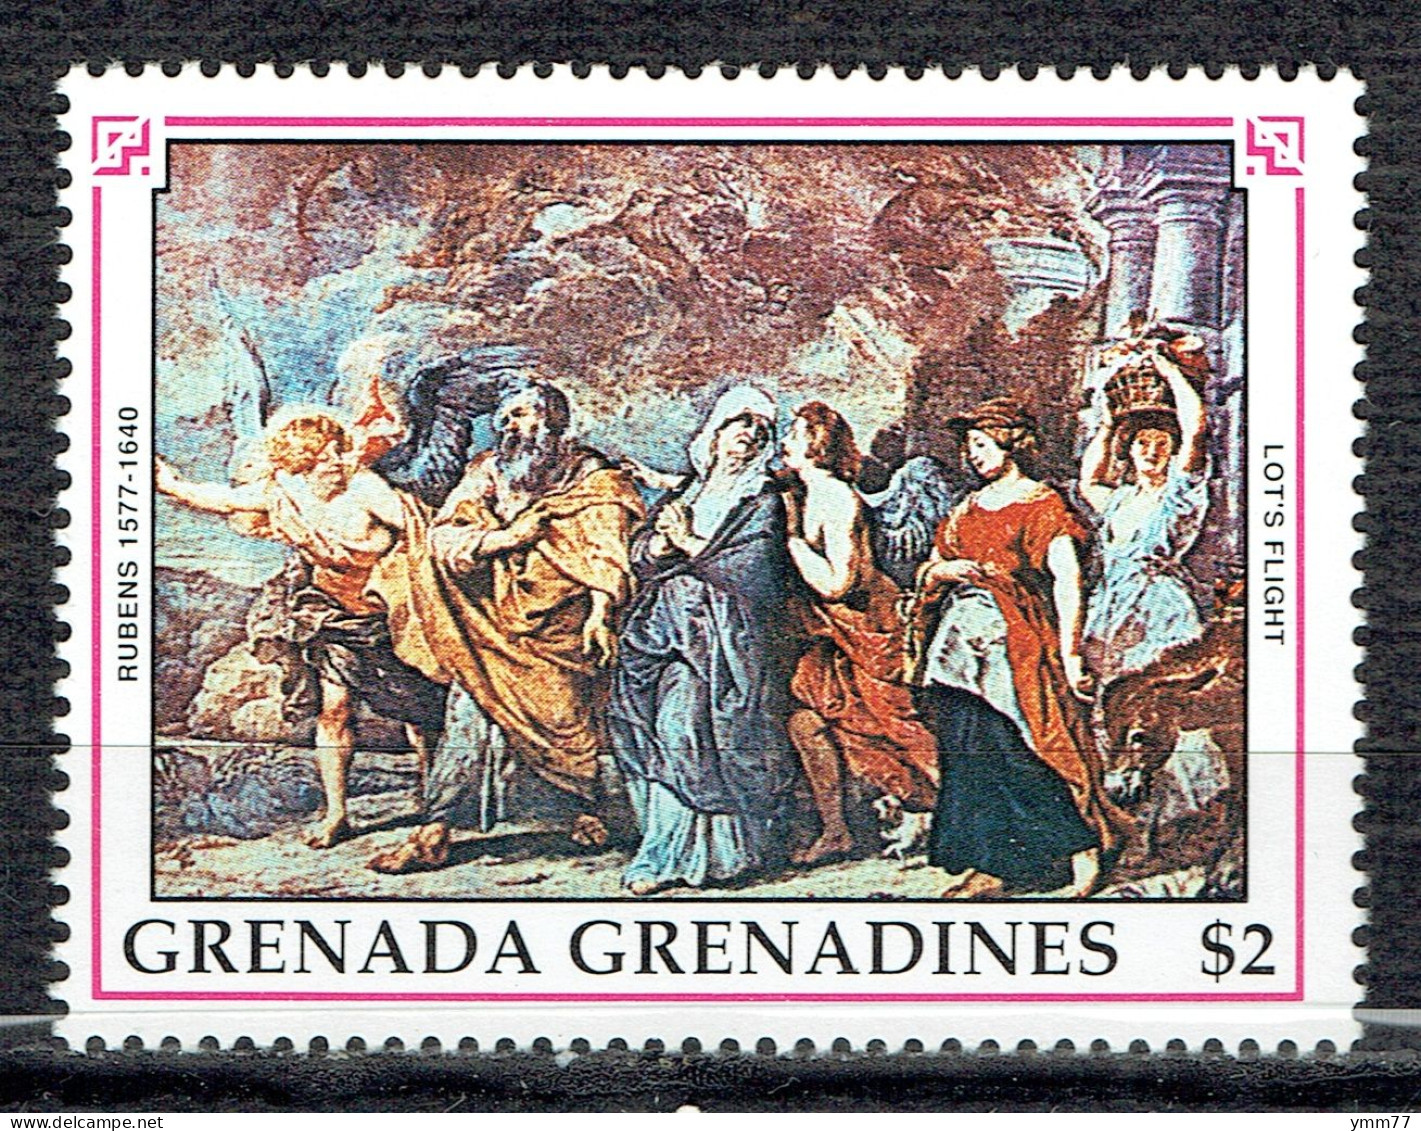 350ème Anniversaire De La Mort De Rubens : "LeCombat De Loth" - Grenade (1974-...)